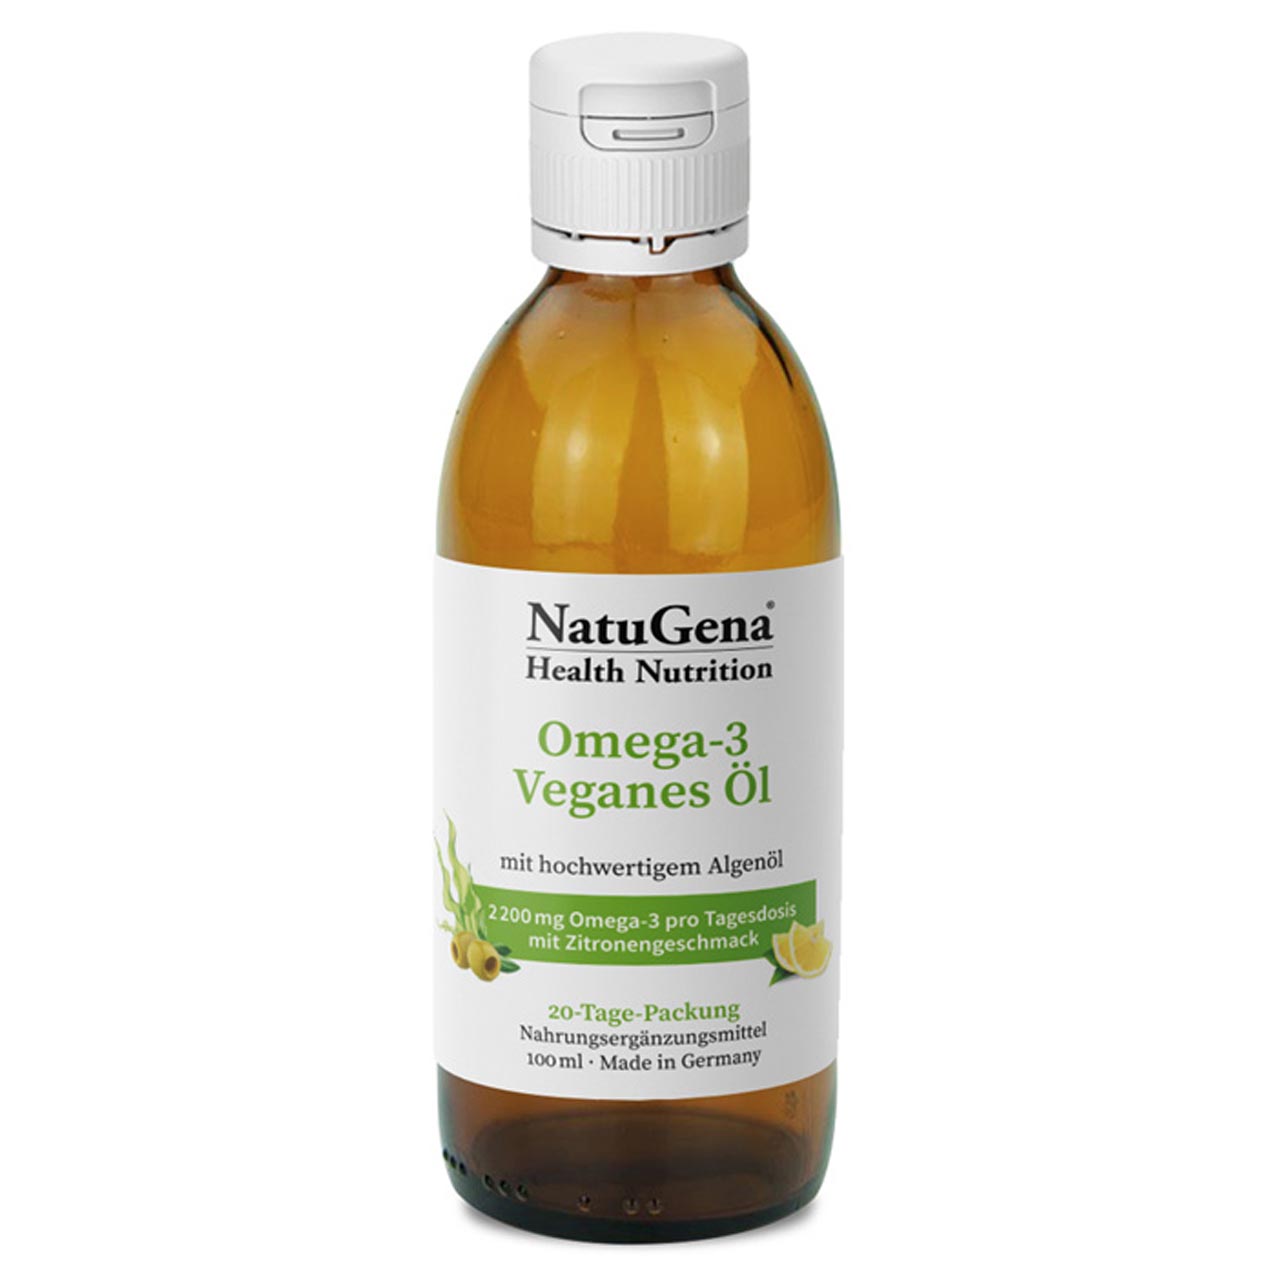 Omega-3 Veganes Öl von NatuGena - 100ml